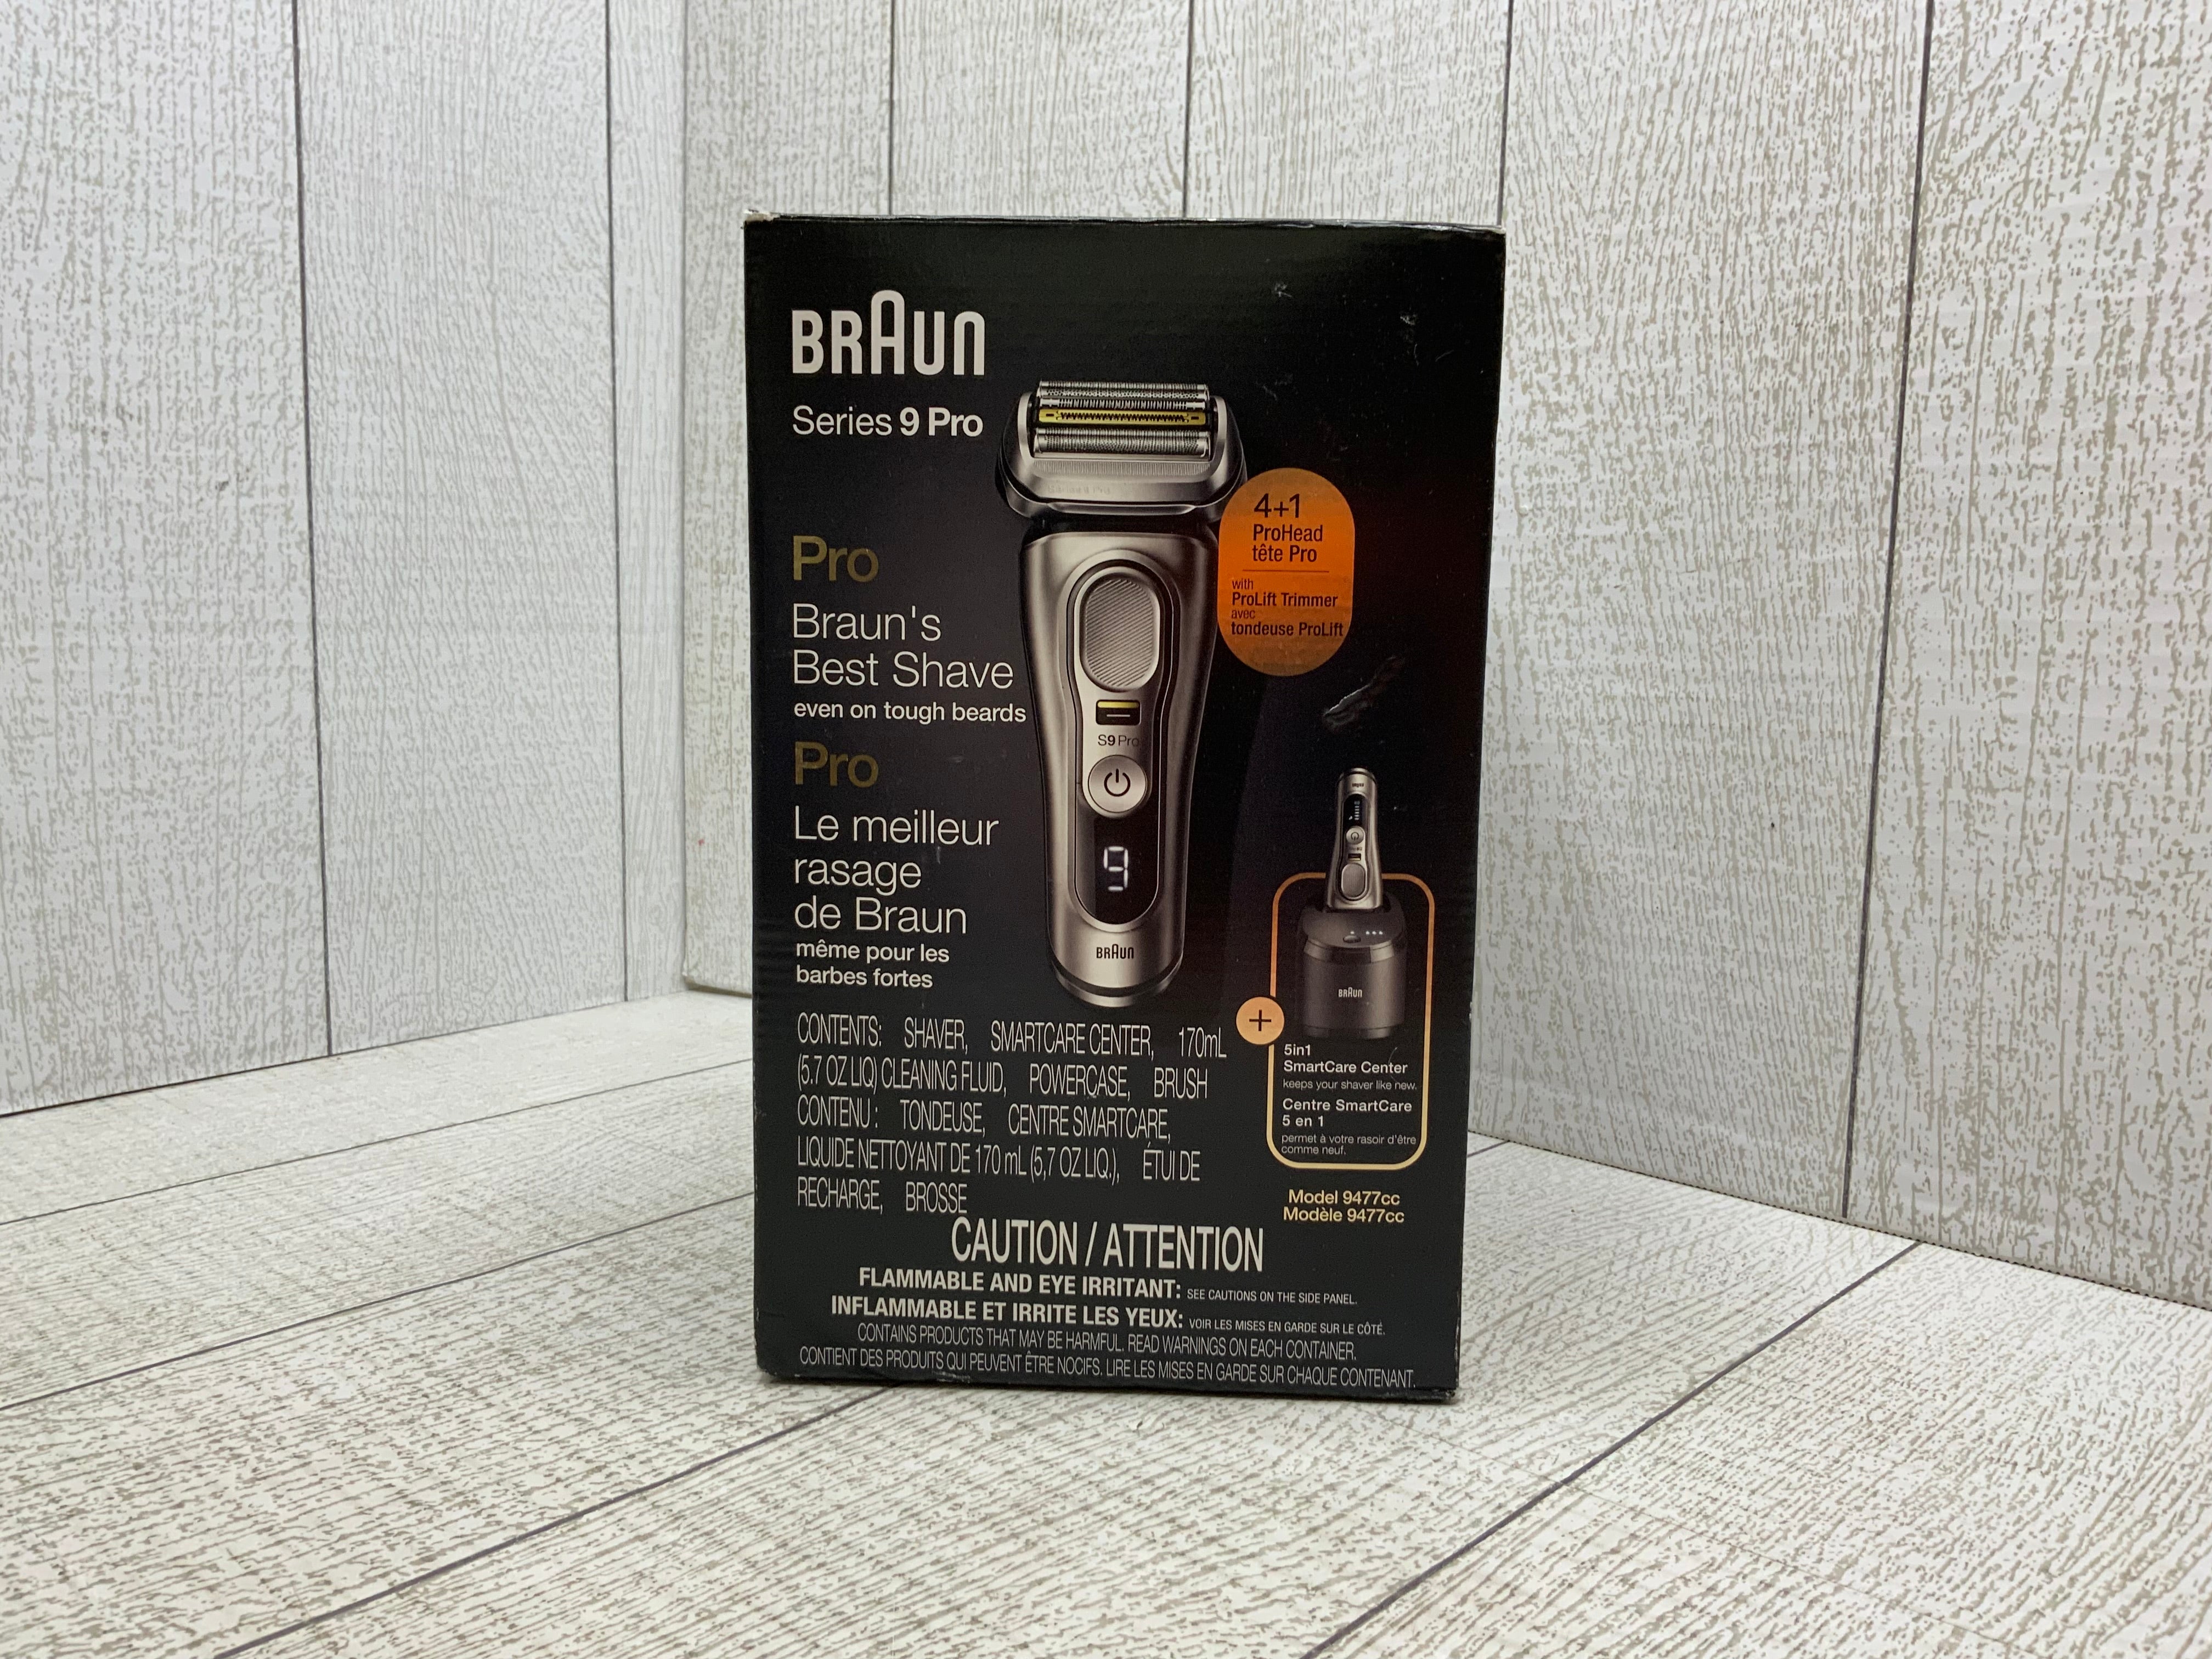 Braun Electric Razor for Men, Waterproof Foil Shaver, Series 9 Pro 9477cc (8051224477934)